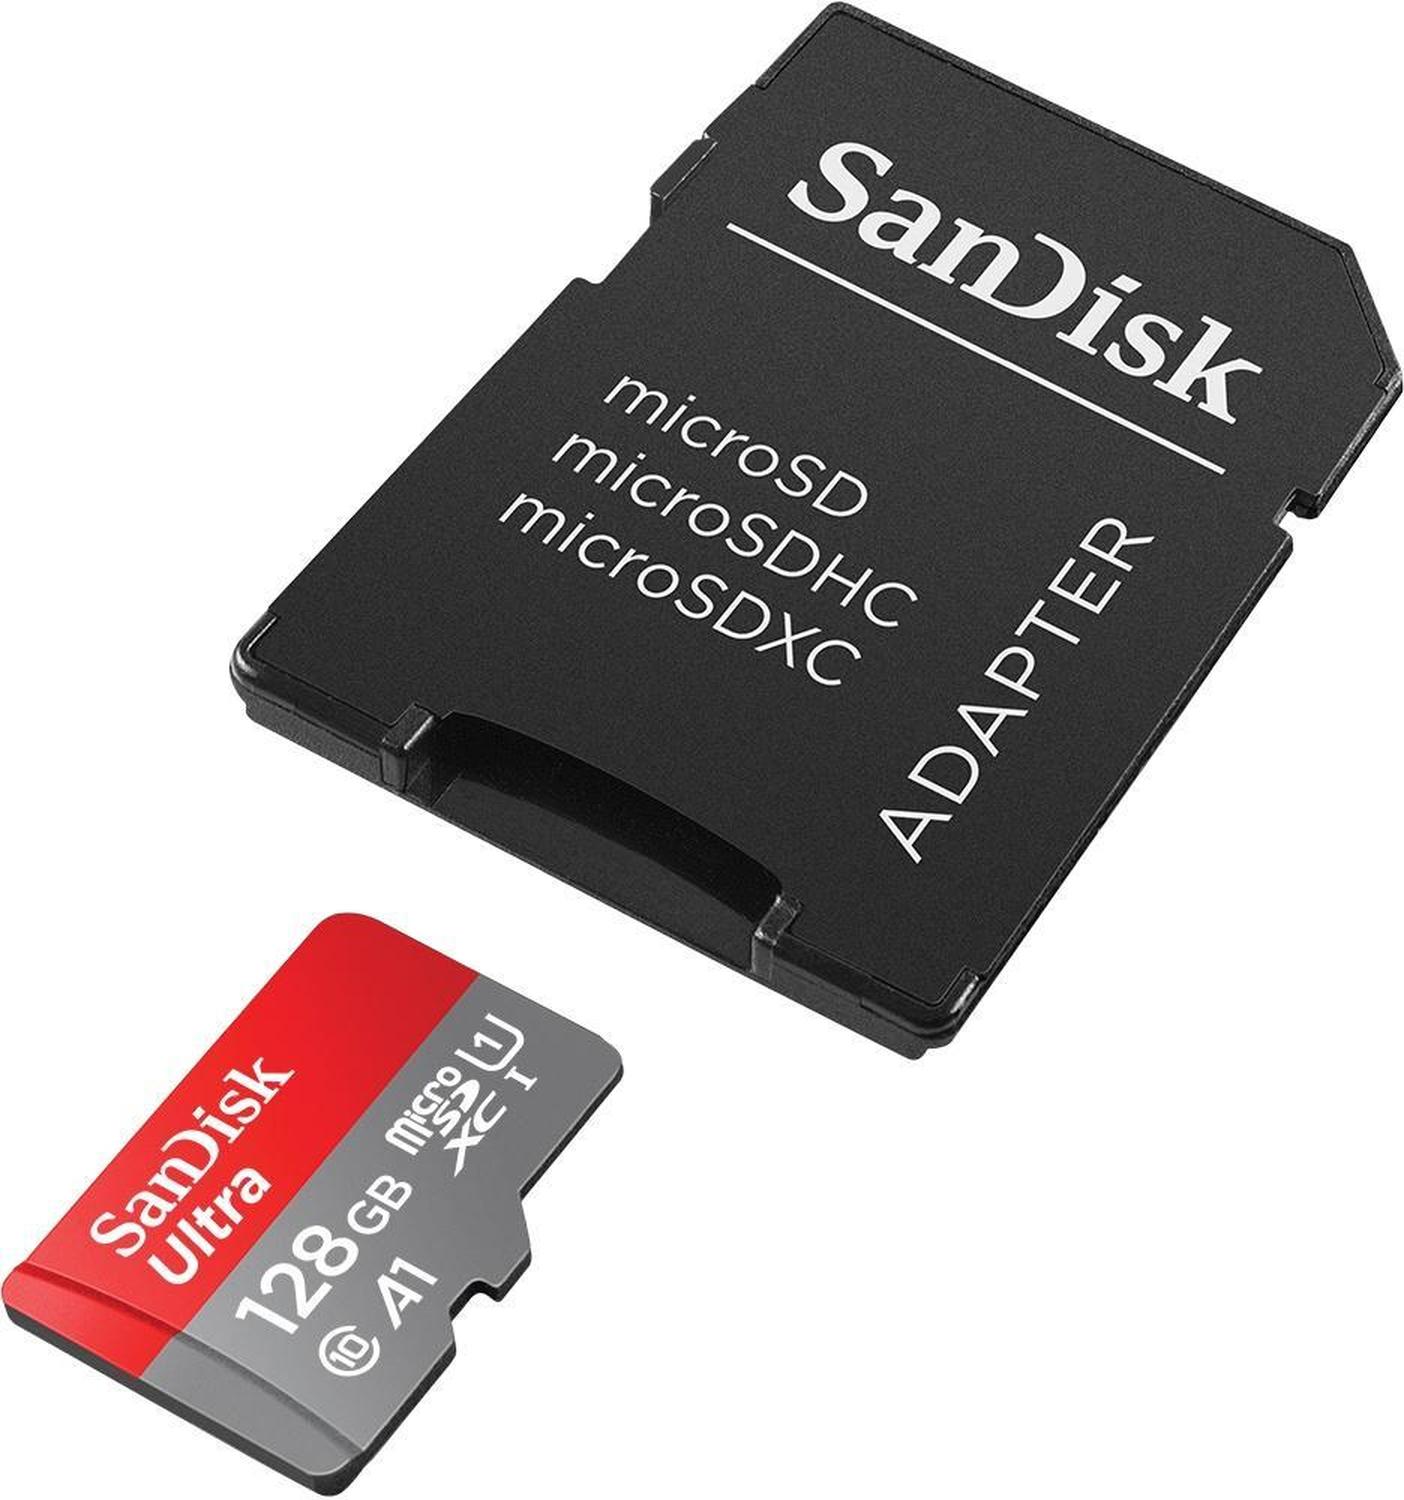 Memoria Flash SanDisk Ultra A1, 128GB MicroSDXC Clase 10, con Adaptador